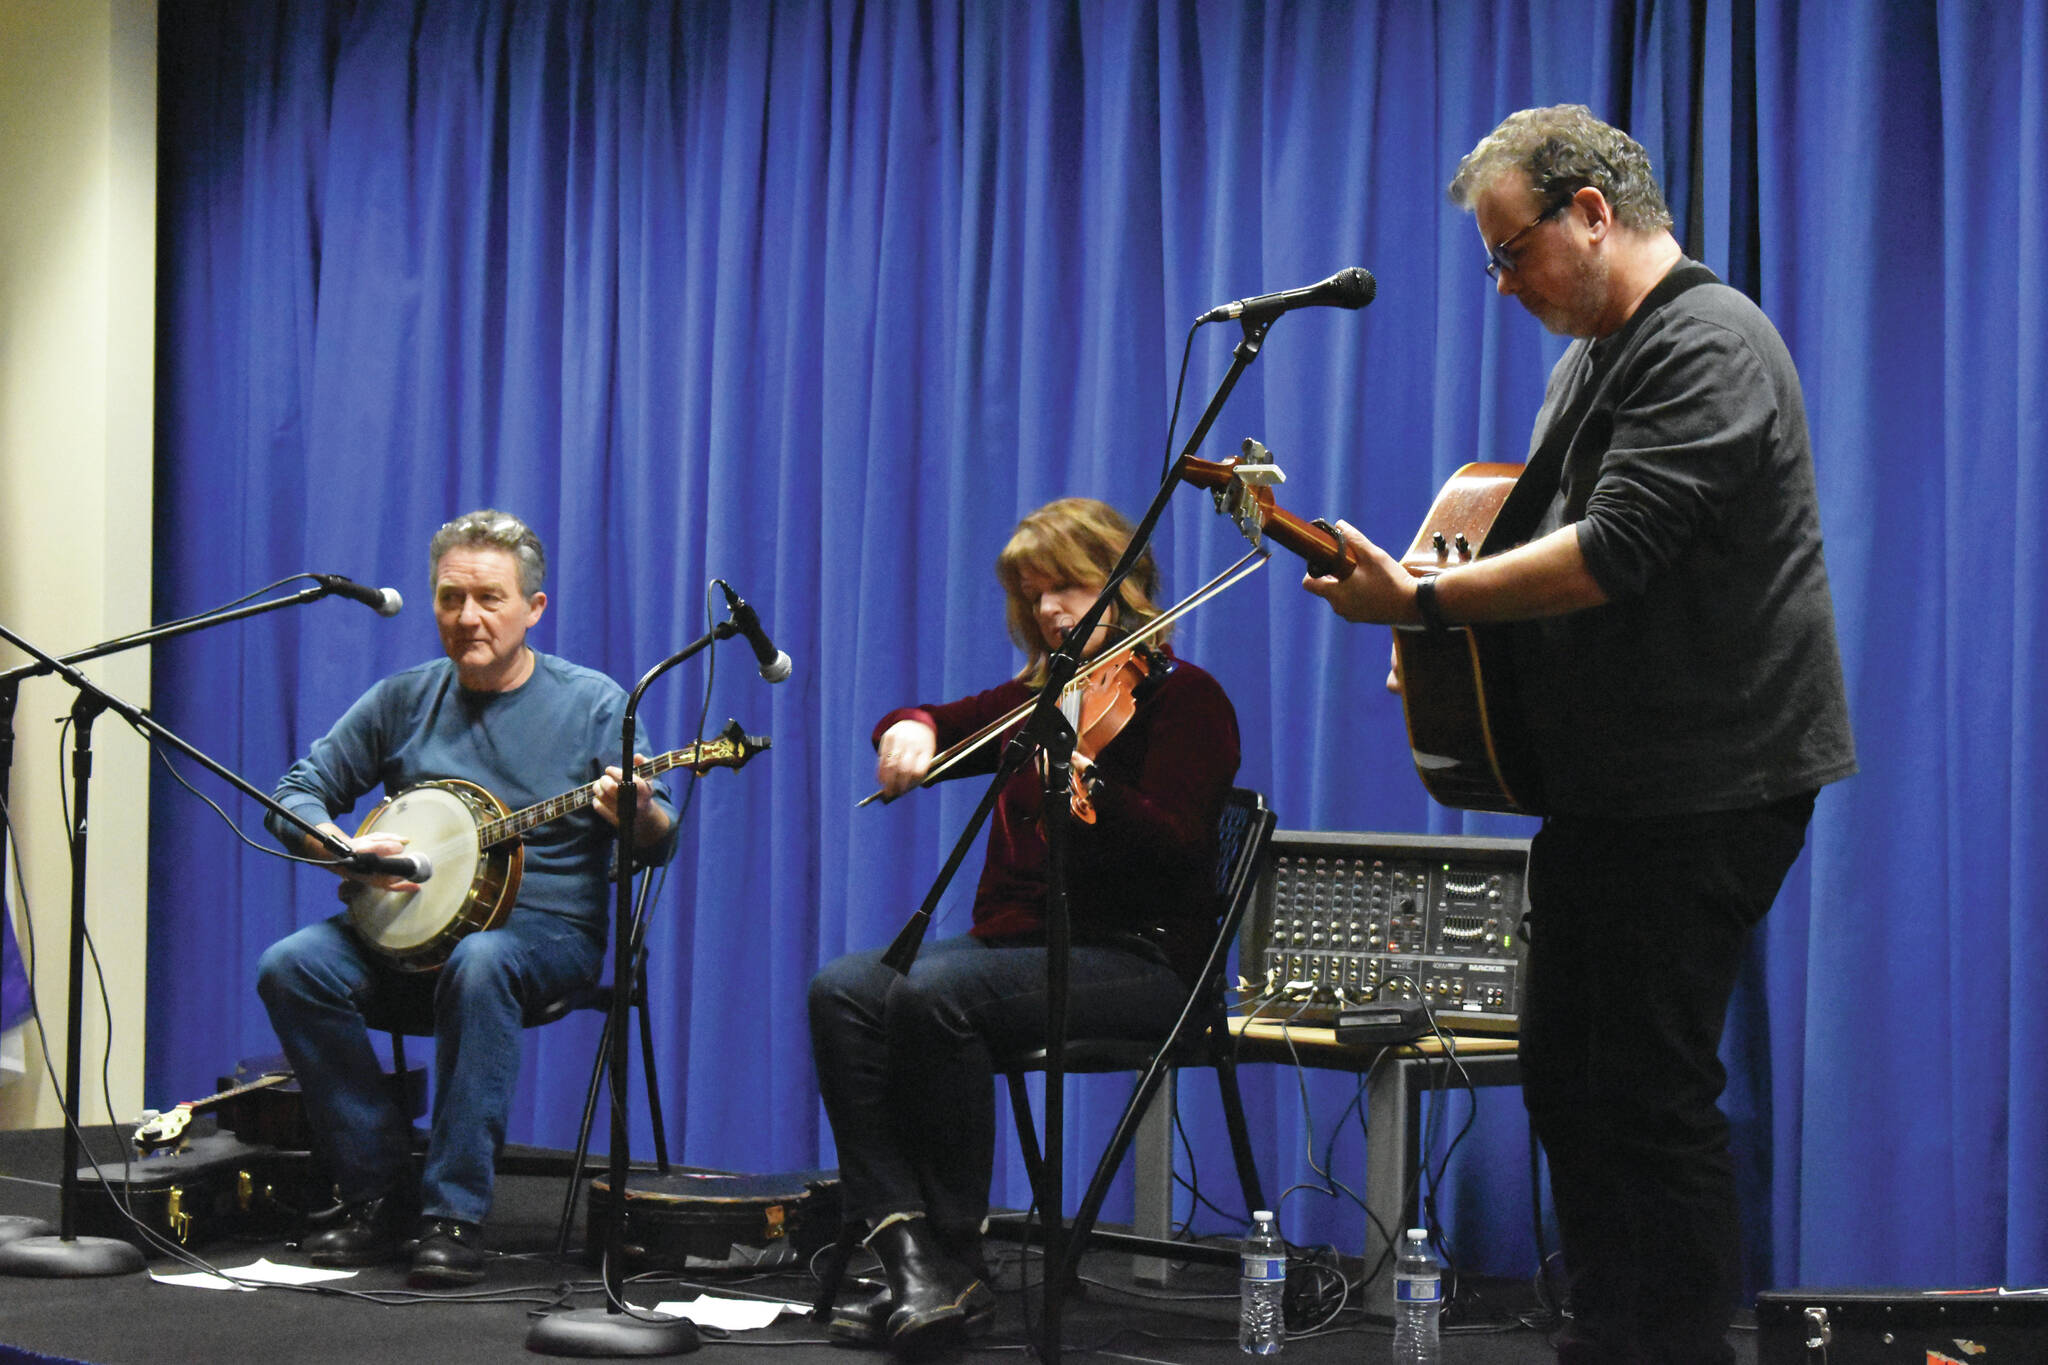 Jake Dye/Peninsula Clarion
John Walsh, Rose Flanagan and Pat Broaders perform during “An Evening of Traditional Irish Music” on Friday, Jan. 27, 2023, at Kenai Peninsula College in Soldotna.